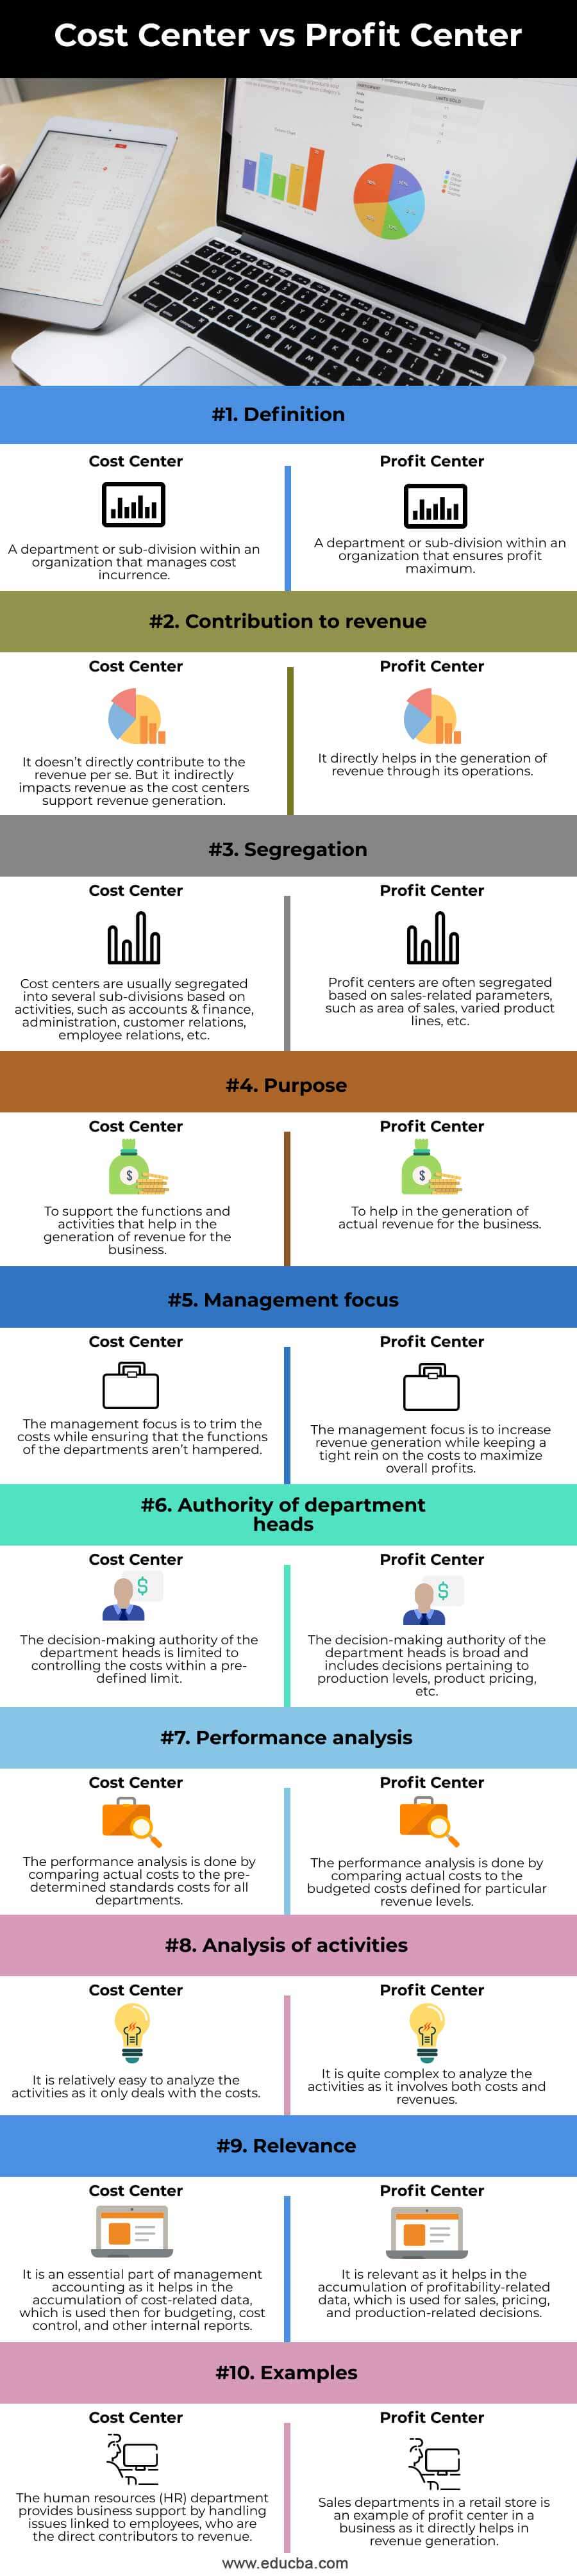 Cost-Center-vs-Profit-Center-info